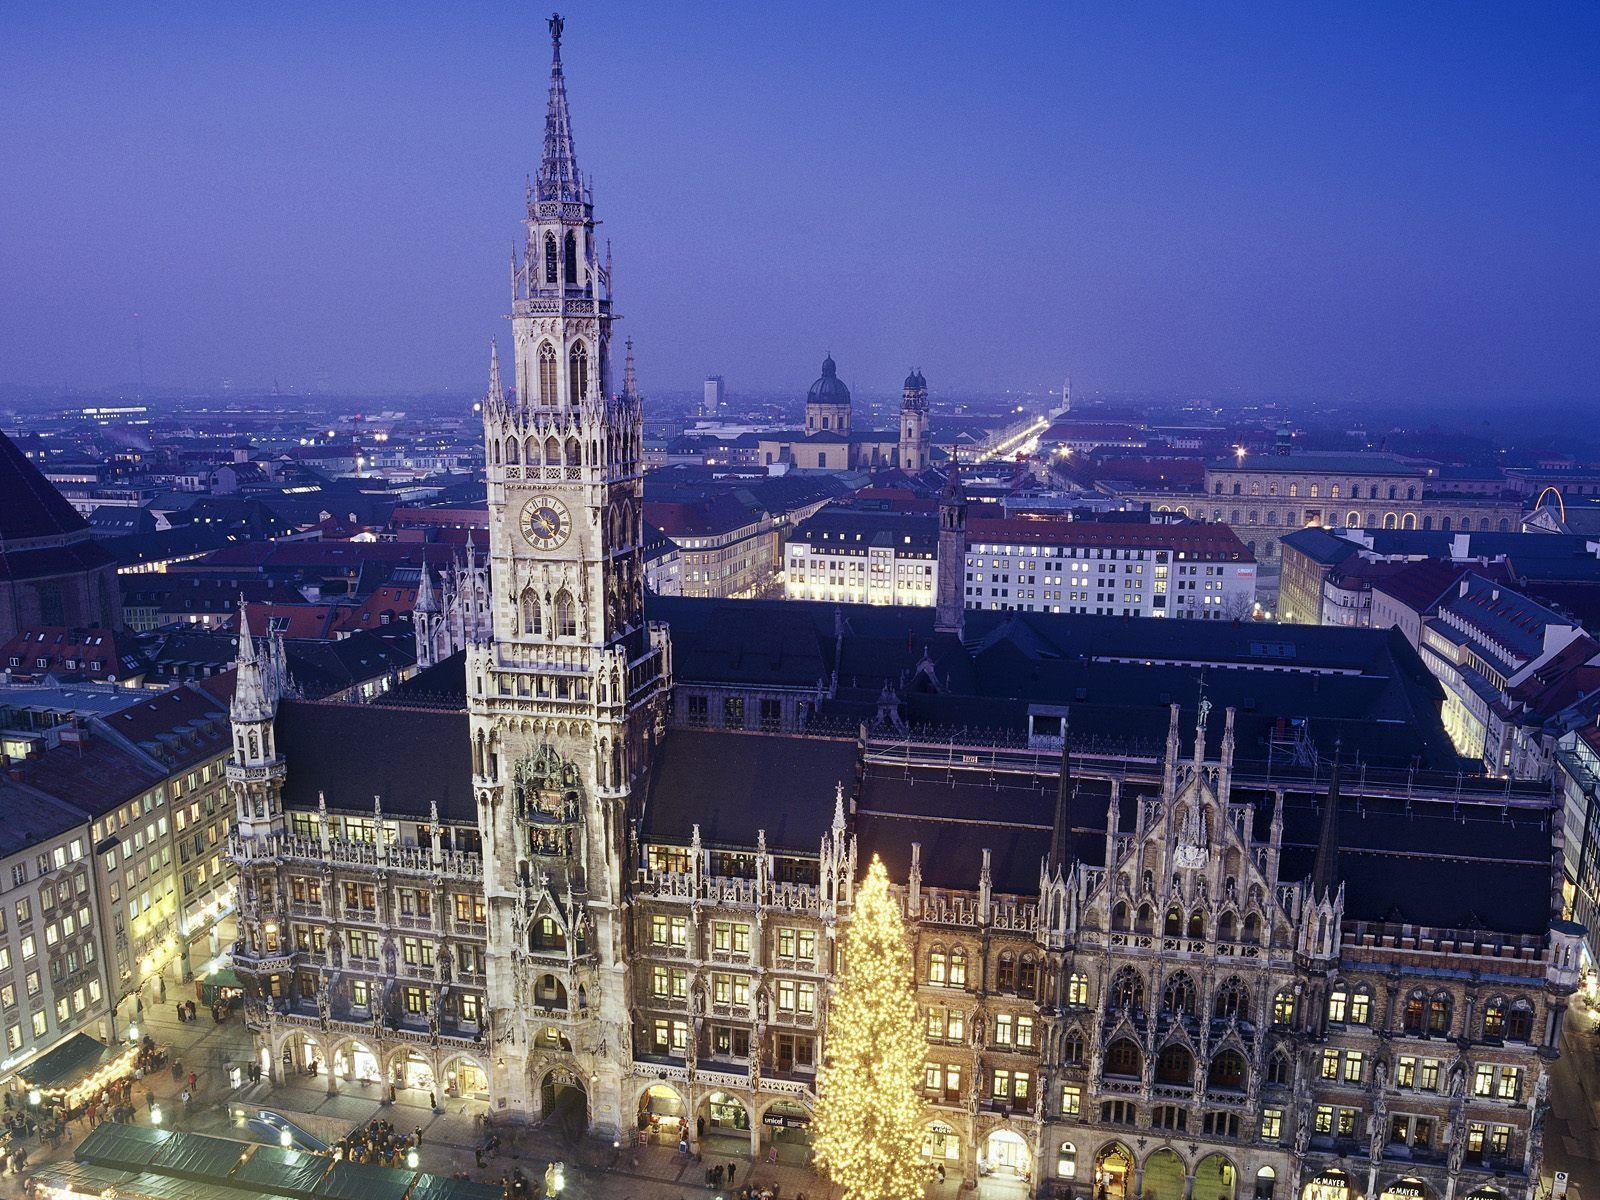 New Town Hall, Munich, Germany < Travel < Life < Desktop Wallpaper